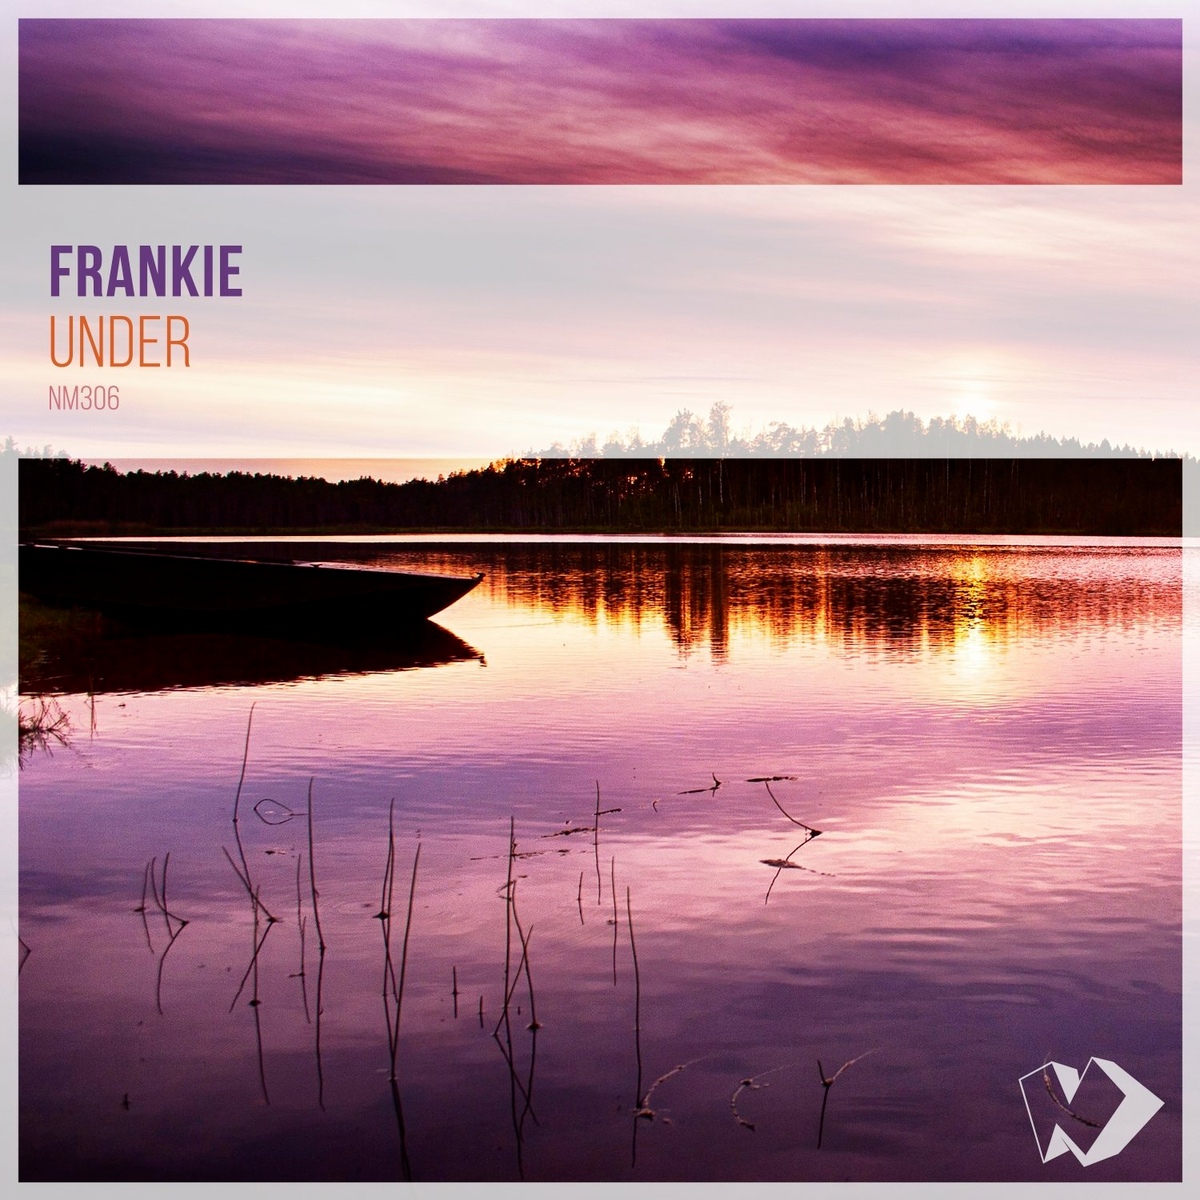 Frankie - Under (Original Mix)